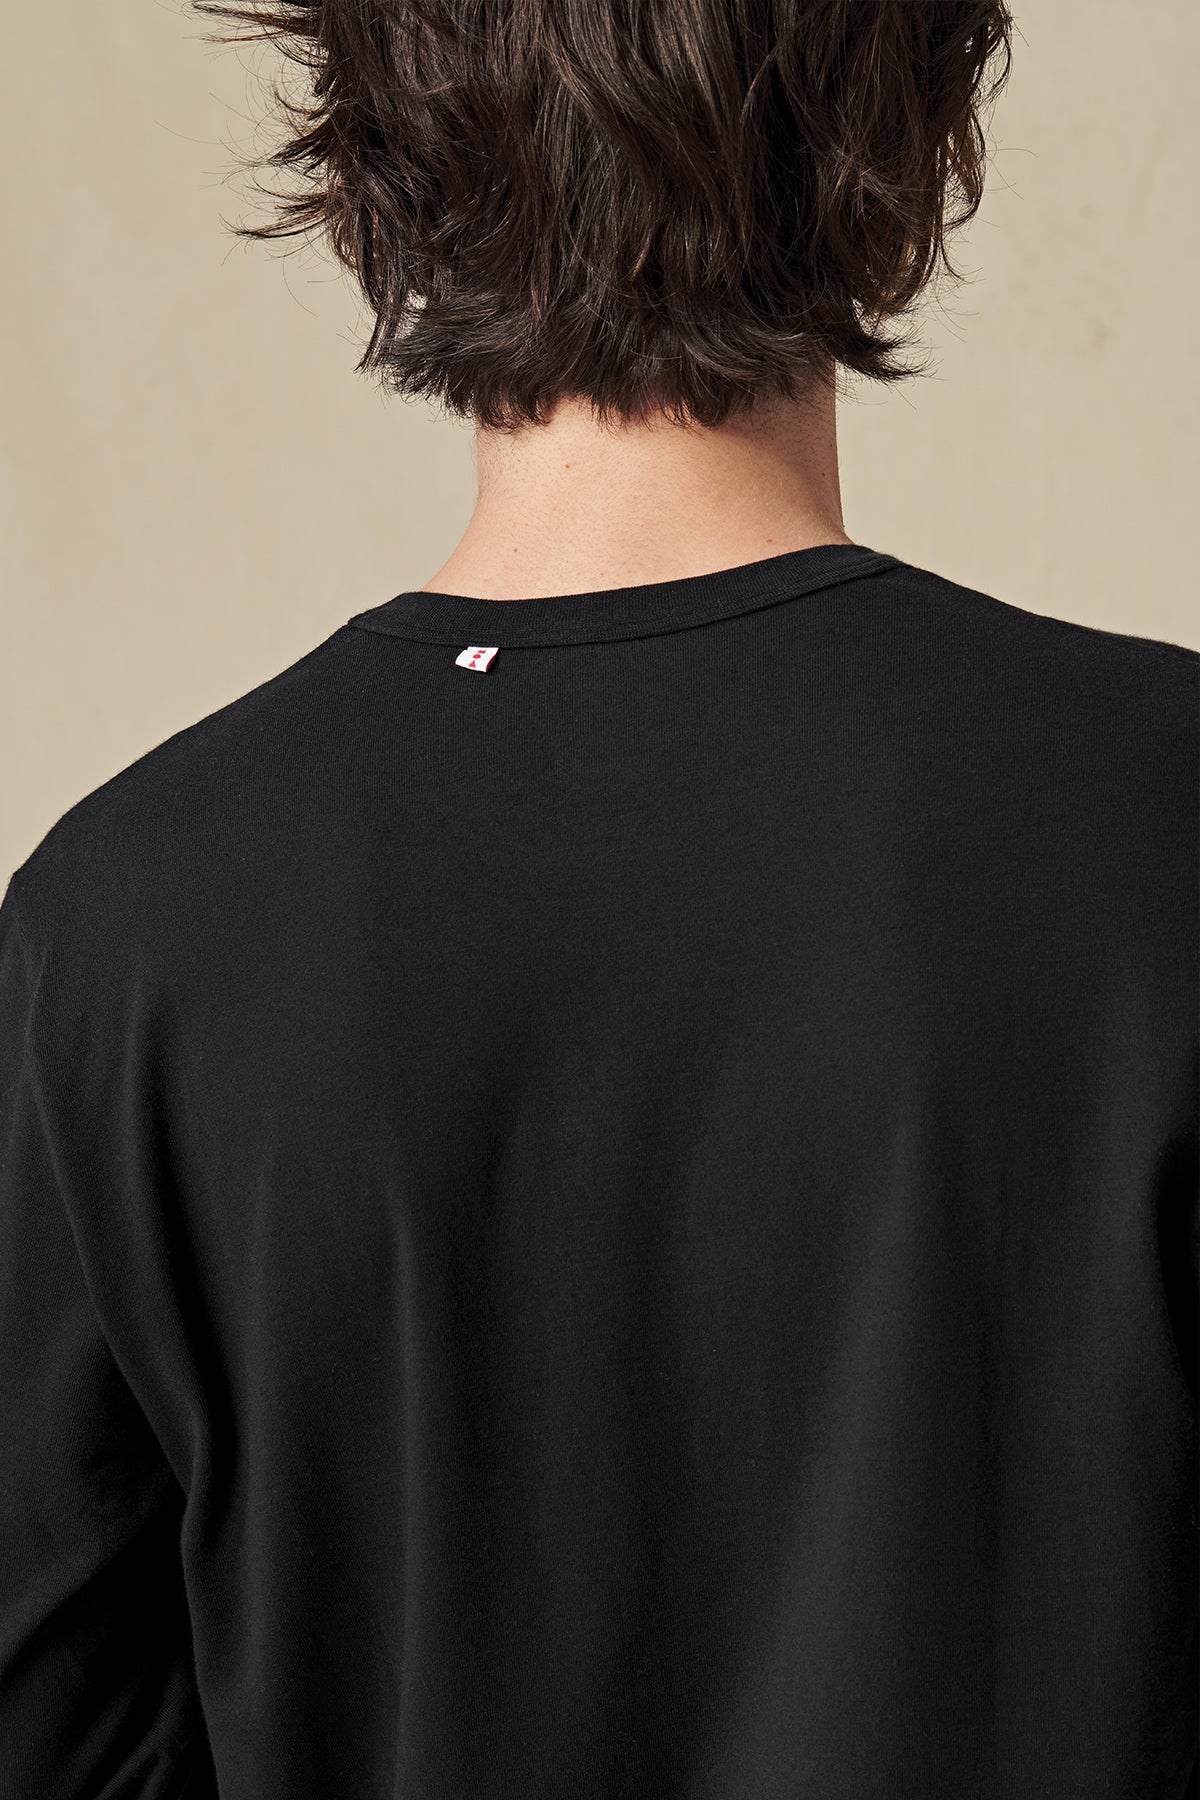 back collar of Black Globe long sleeve tee